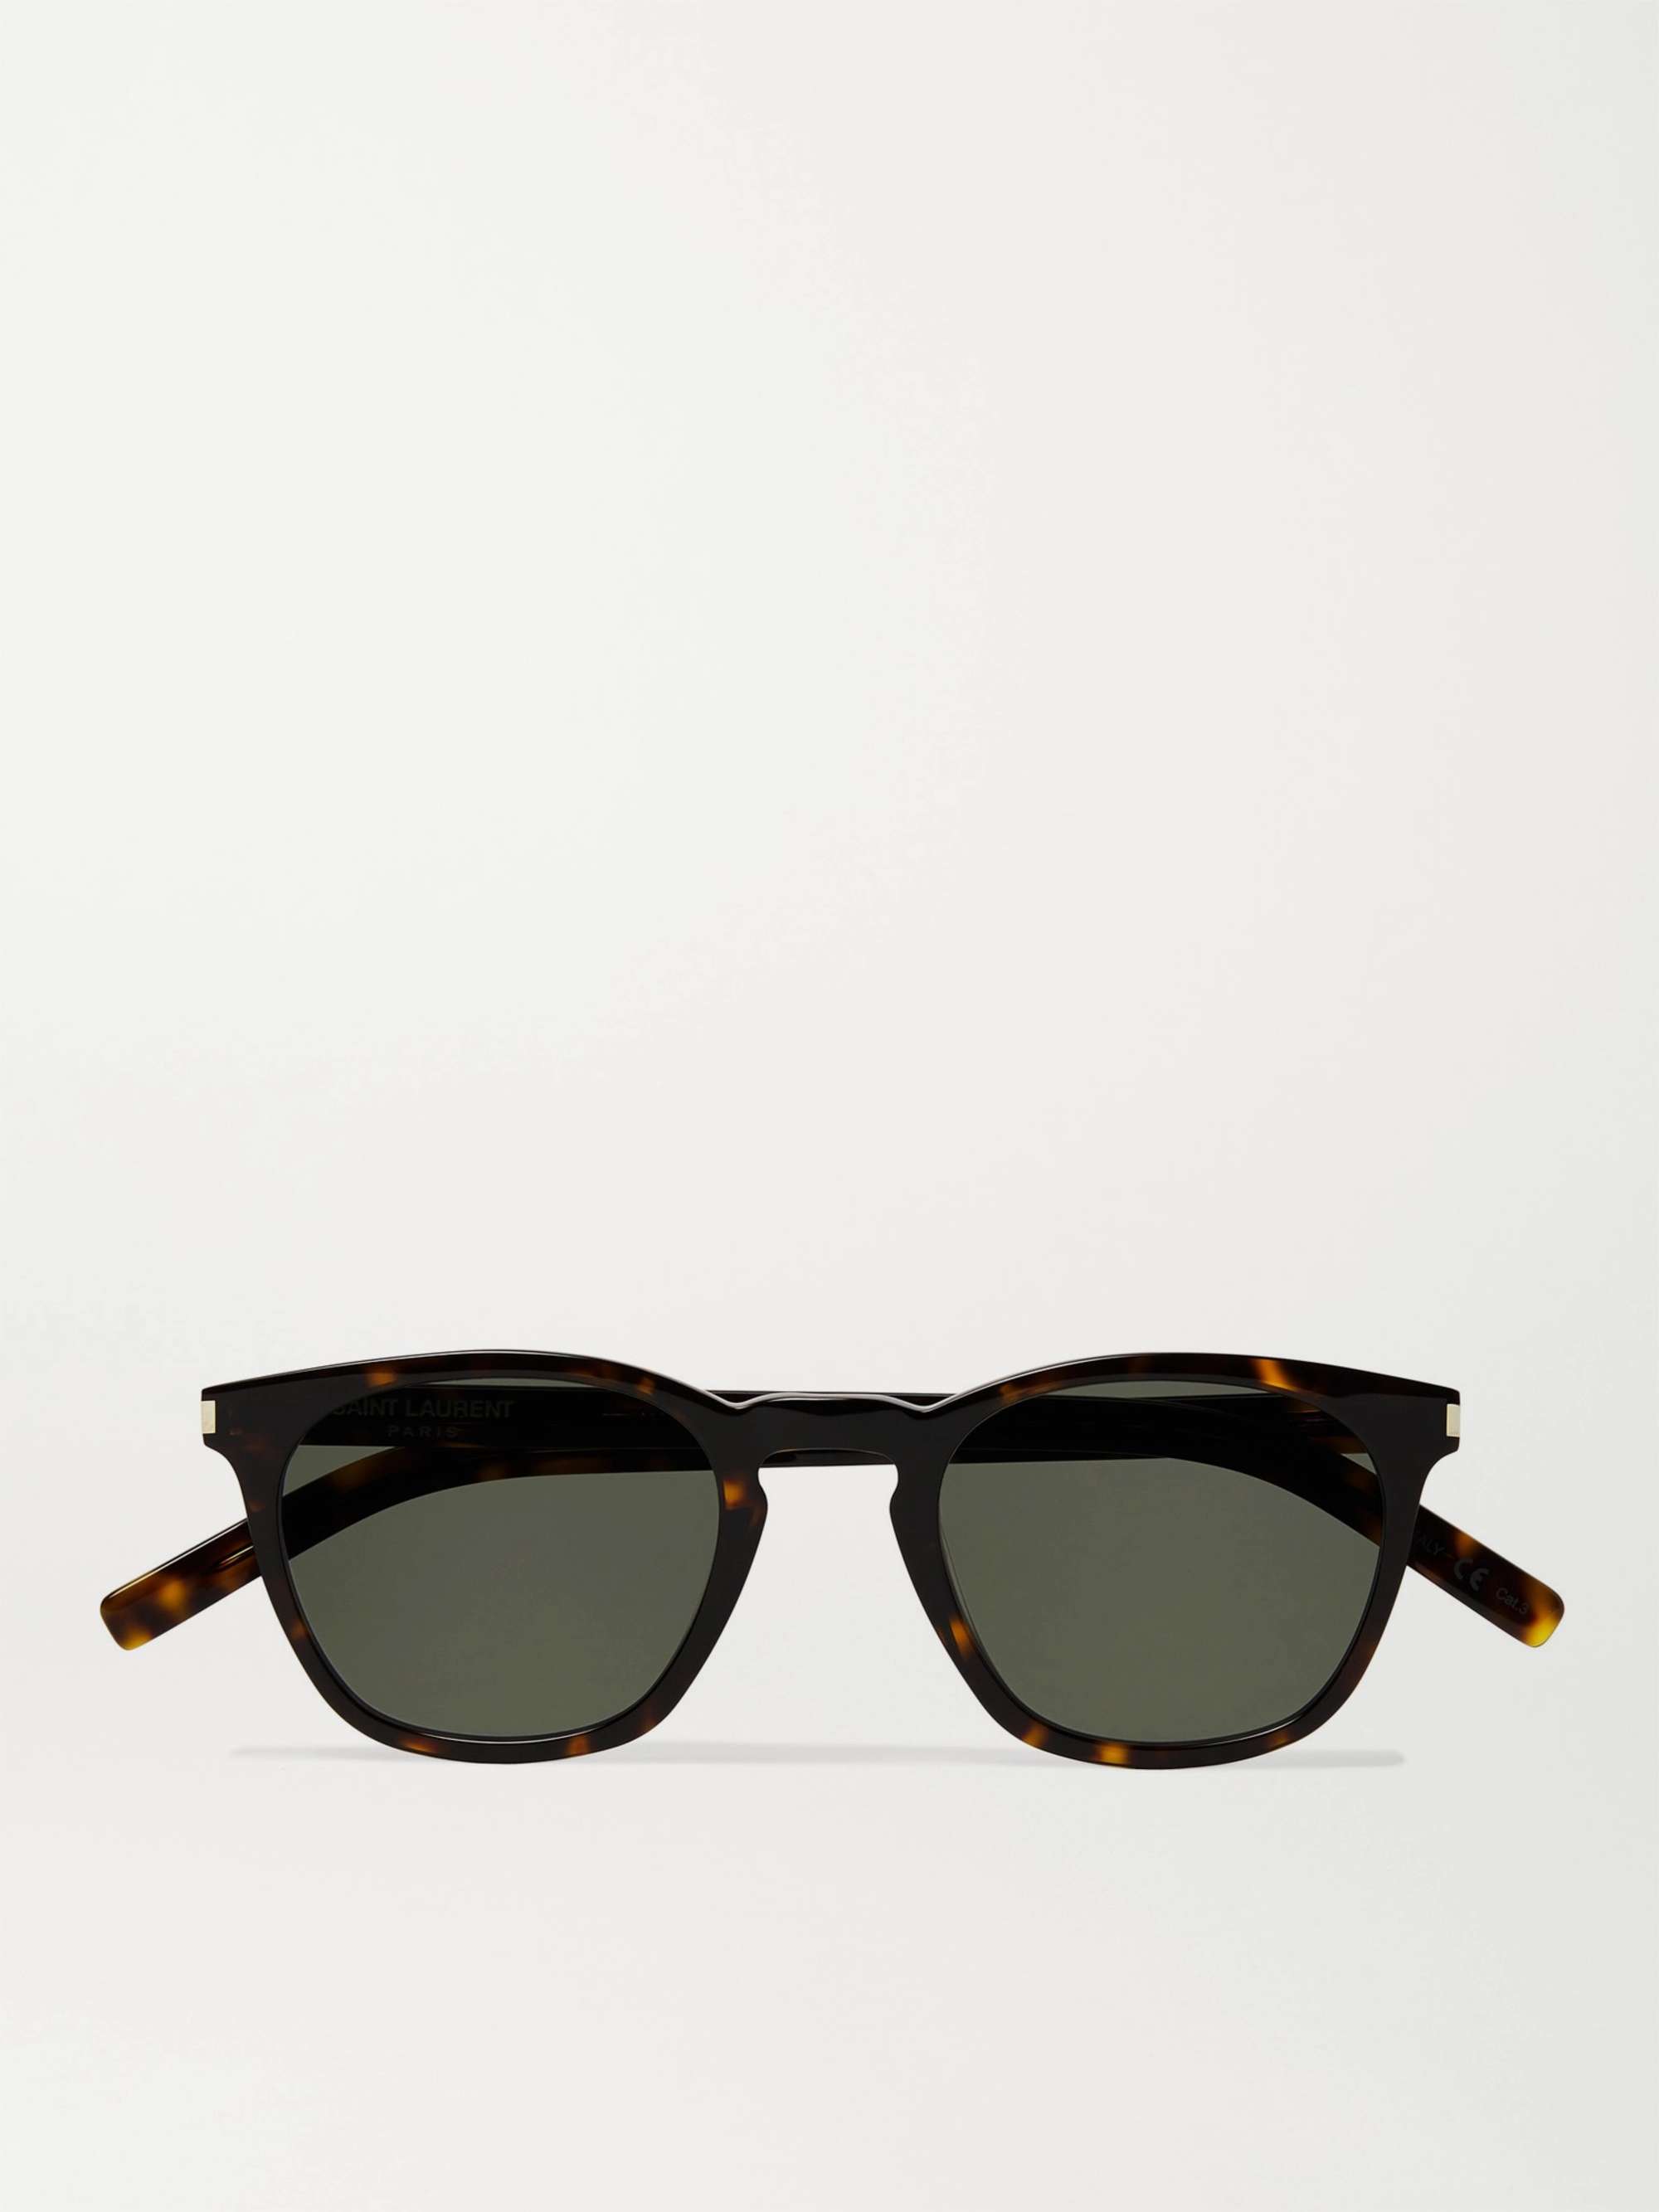 SAINT LAURENT D-Frame Tortoiseshell Acetate Sunglasses